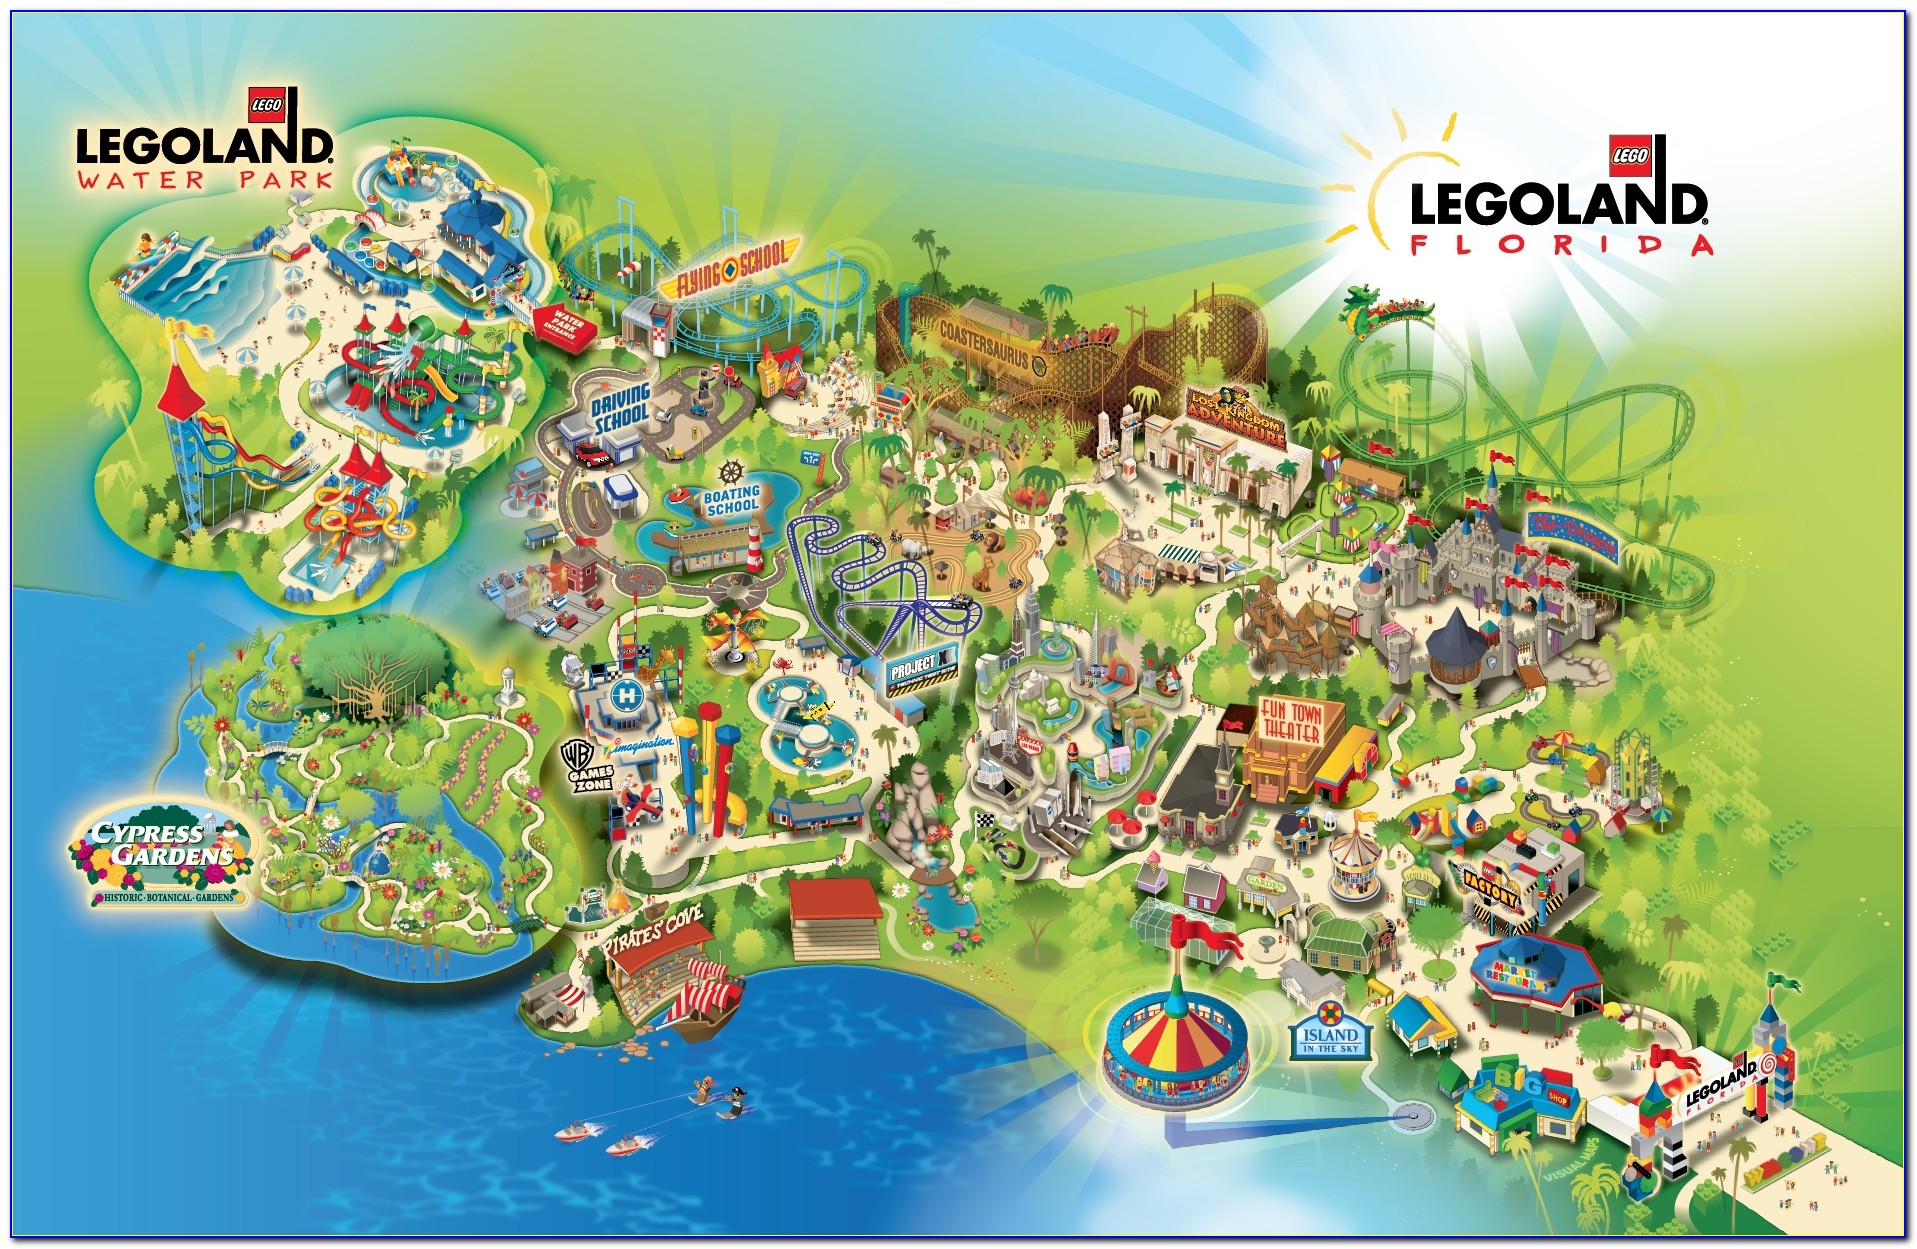 Legoland Florida Map 2019